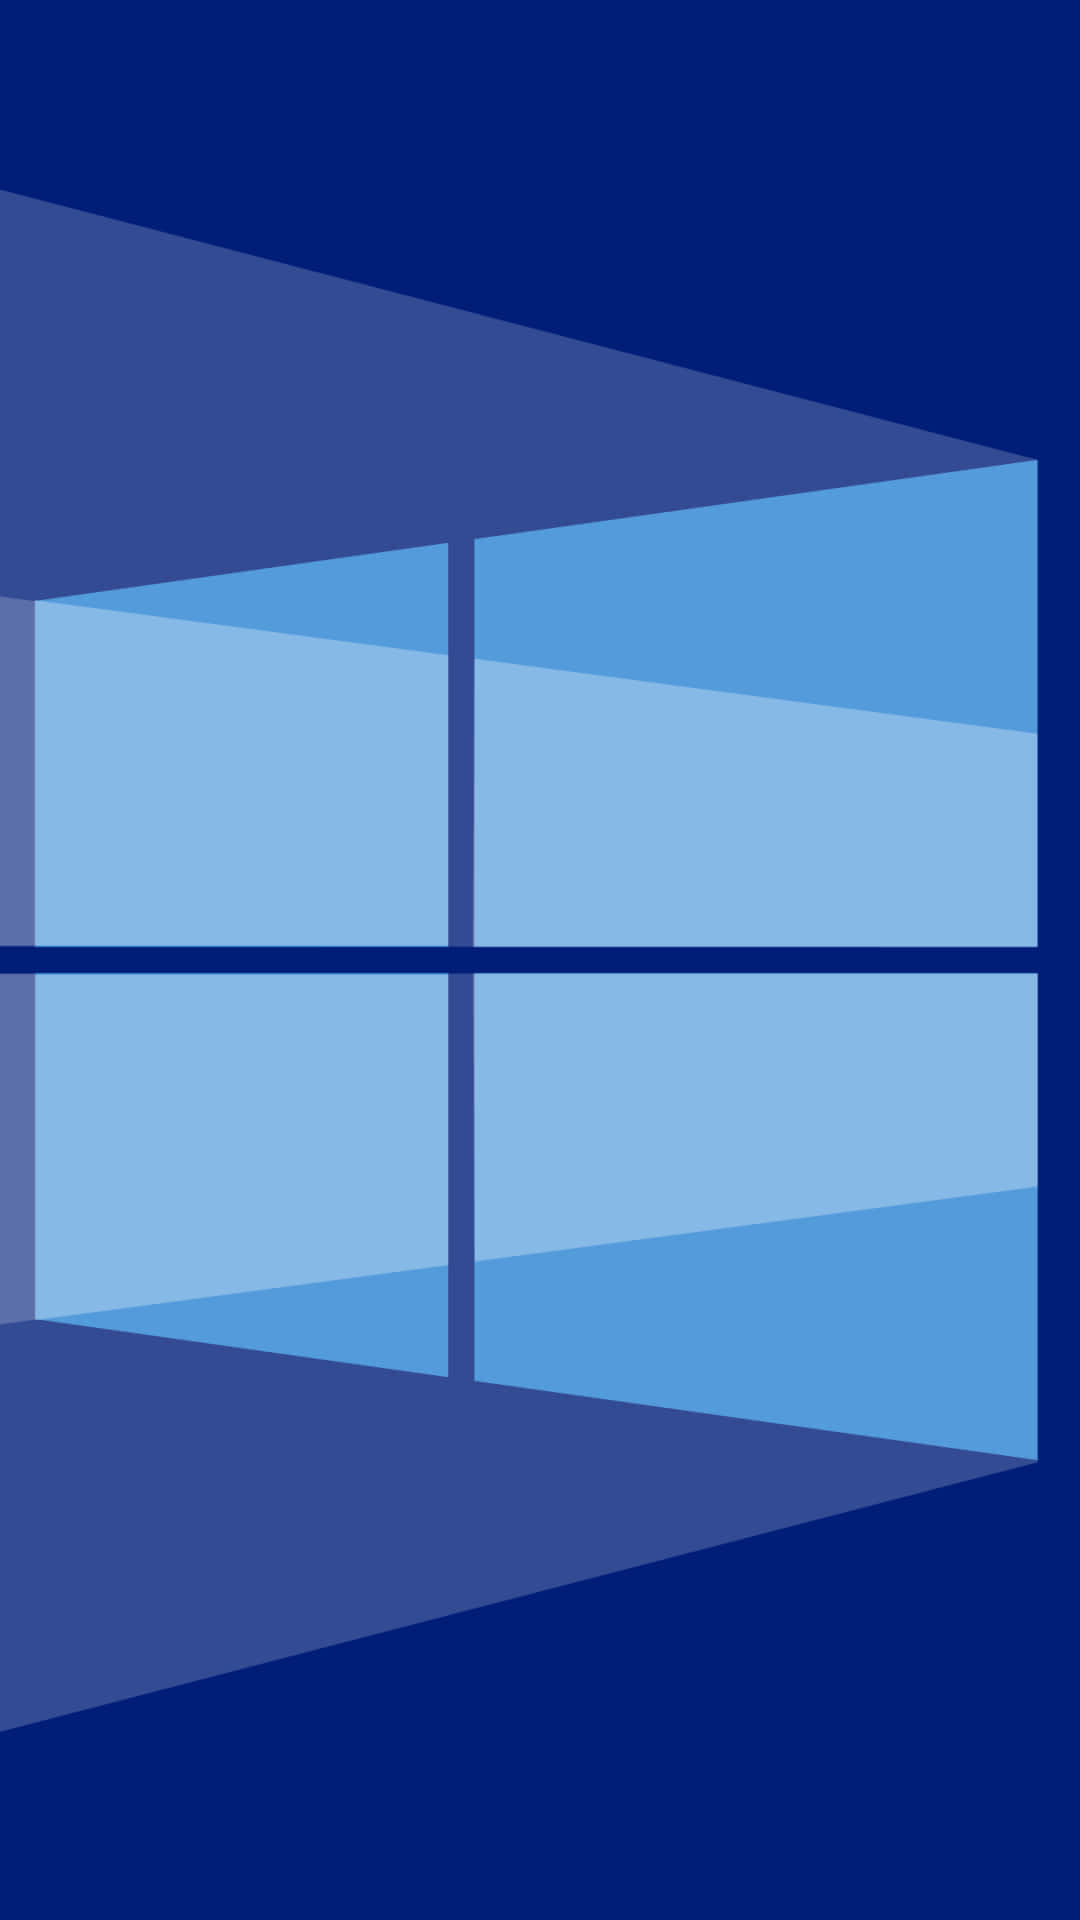 Iconic Microsoft Windows Wallpaper Image